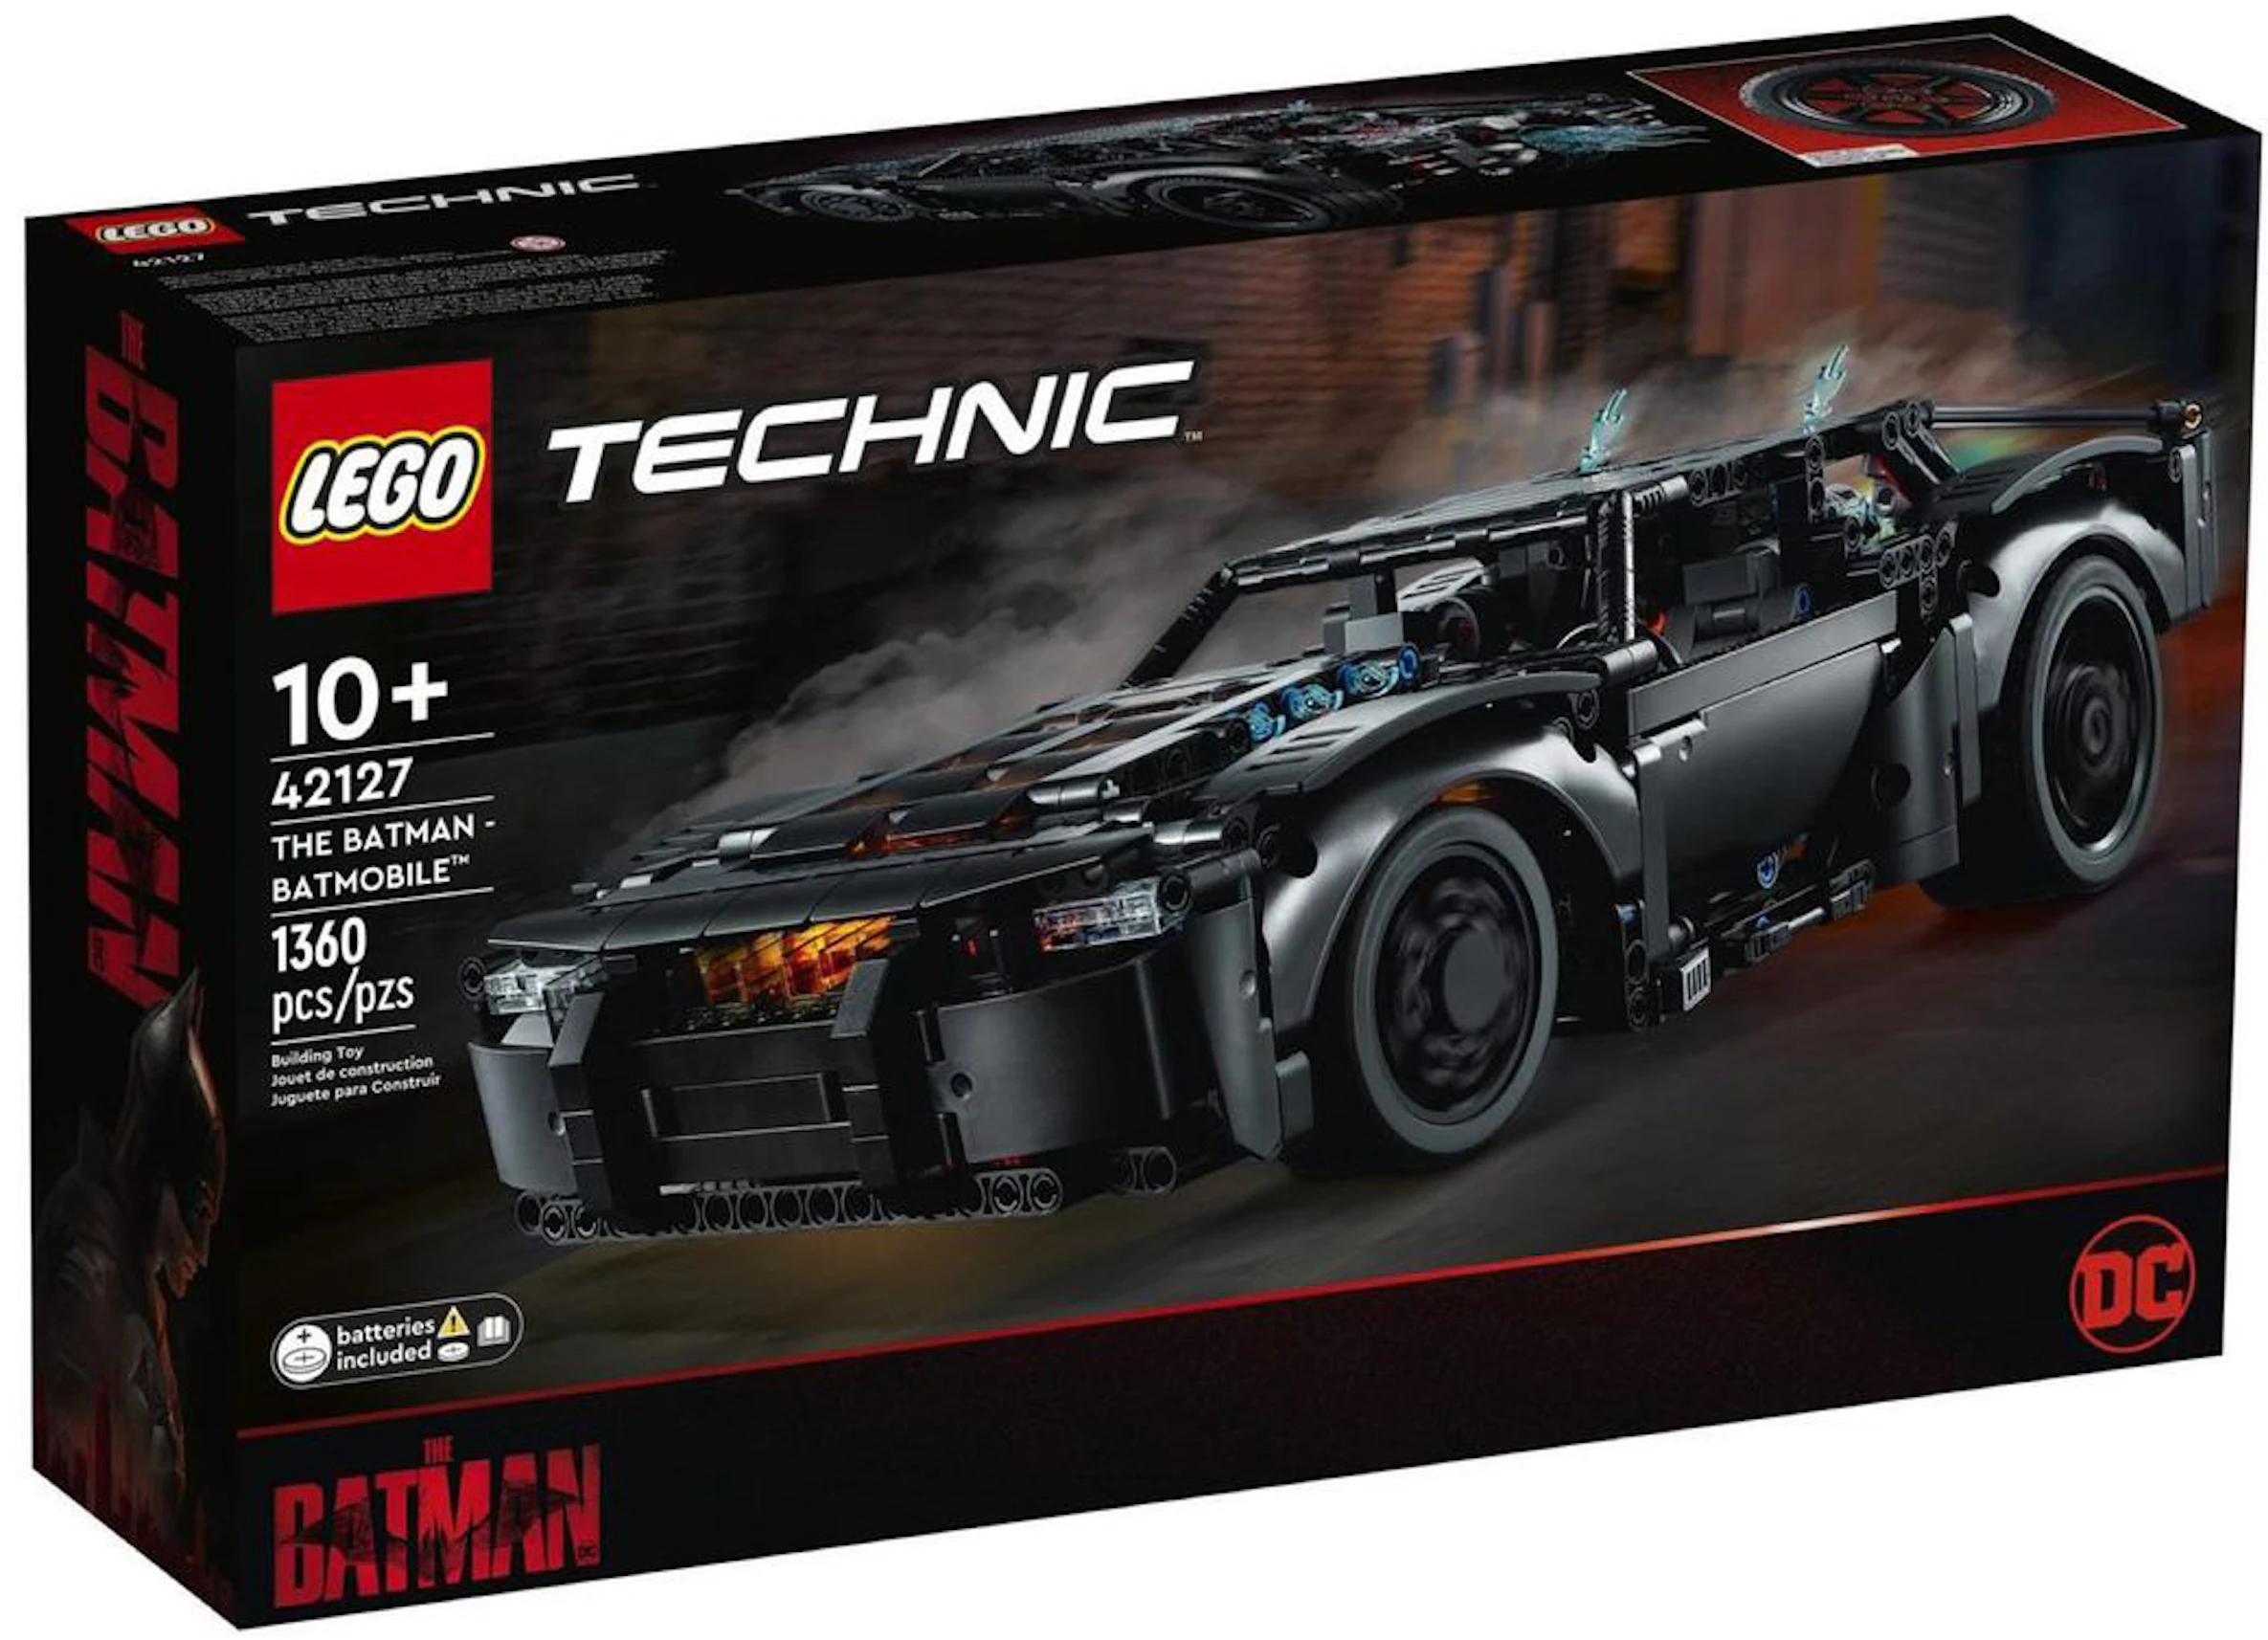 LEGO Technic DC The Batman Batmobile Set 42127 Black - FW21 - US